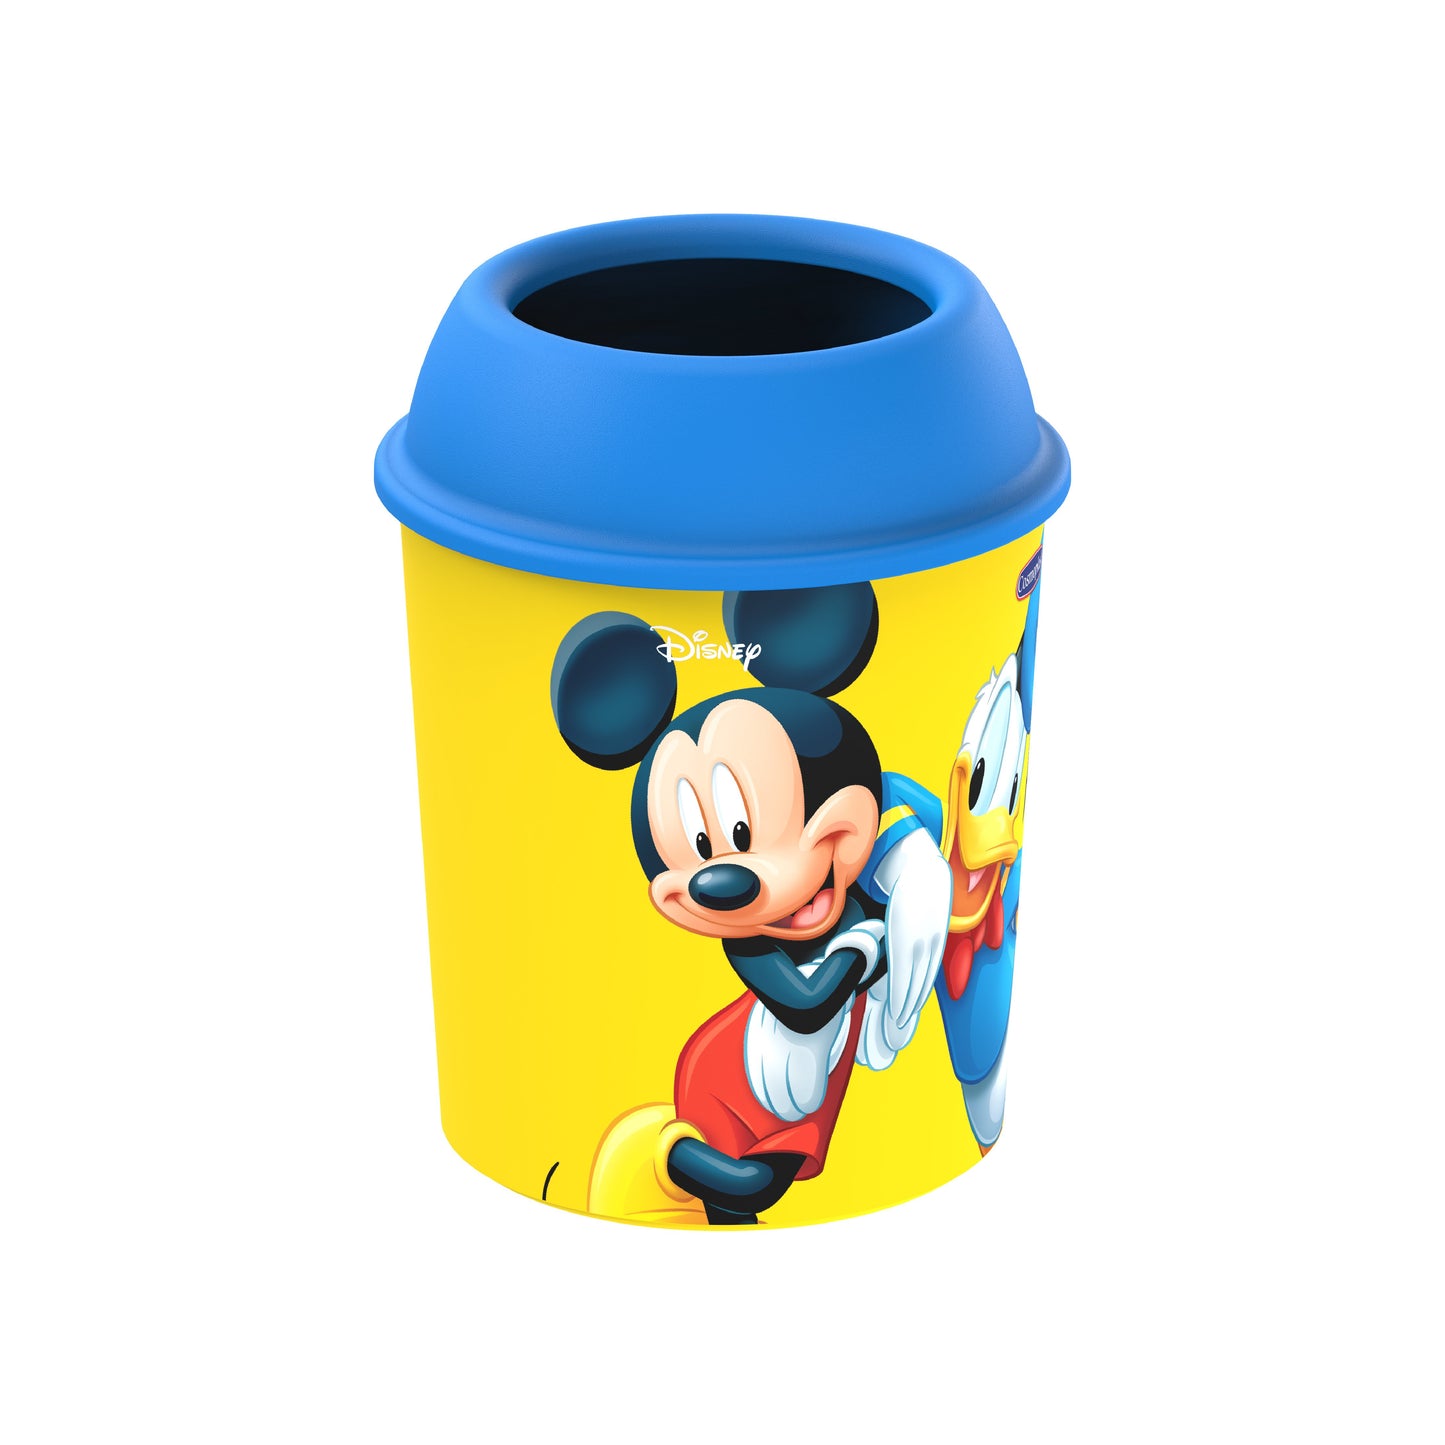 Cosmoplast Disney Mickey & Friends Boys Plastic Round Dust Bin 5 Liters